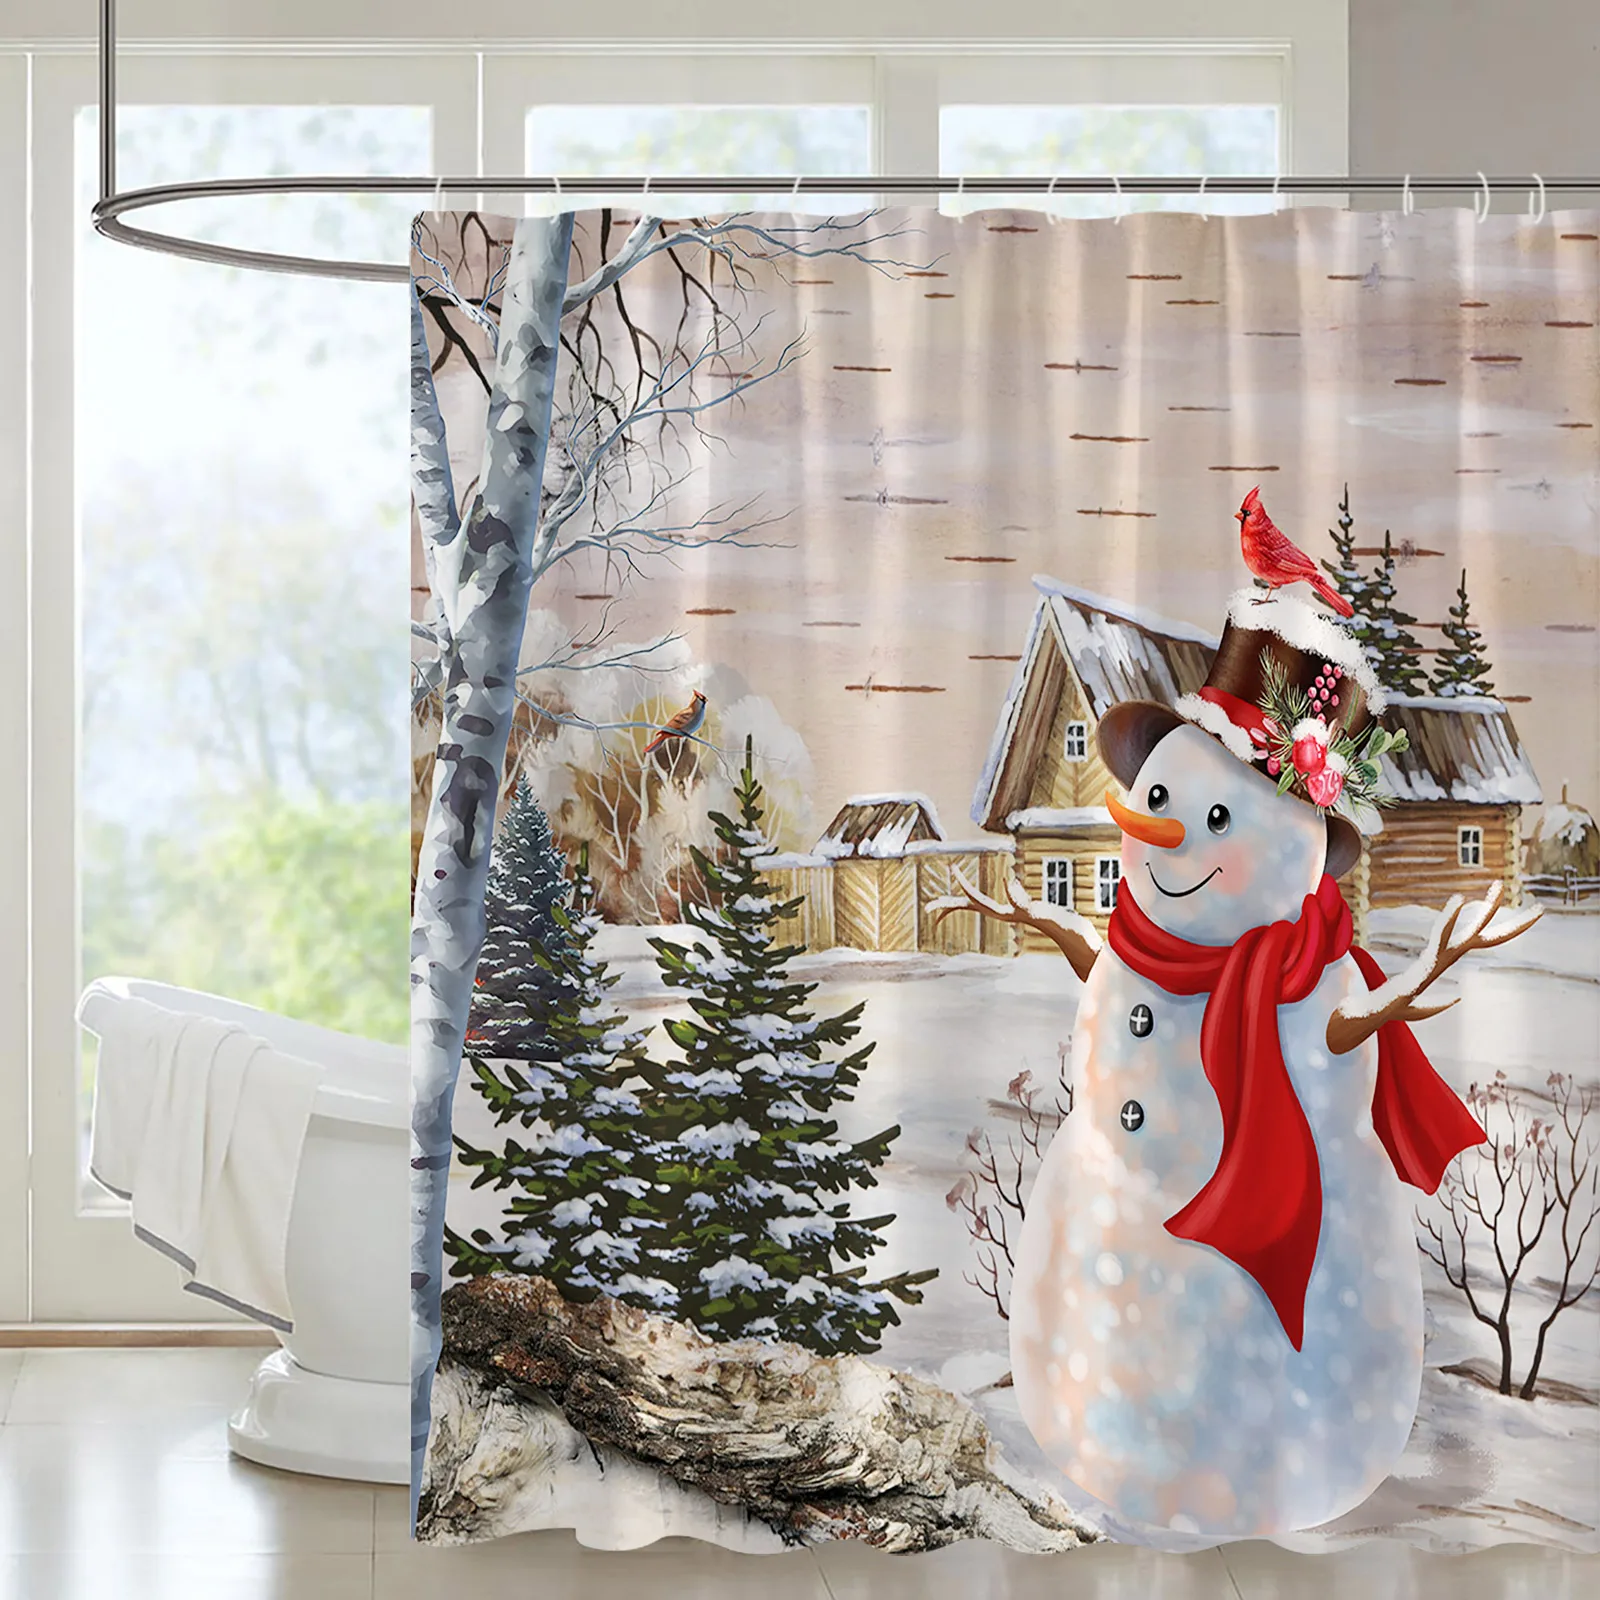 Christmas Shower Curtain Winter Snow Snowman Shower Curtain for Bathroom New Year Holiday Home Decor Fabric Bath Accessories Set